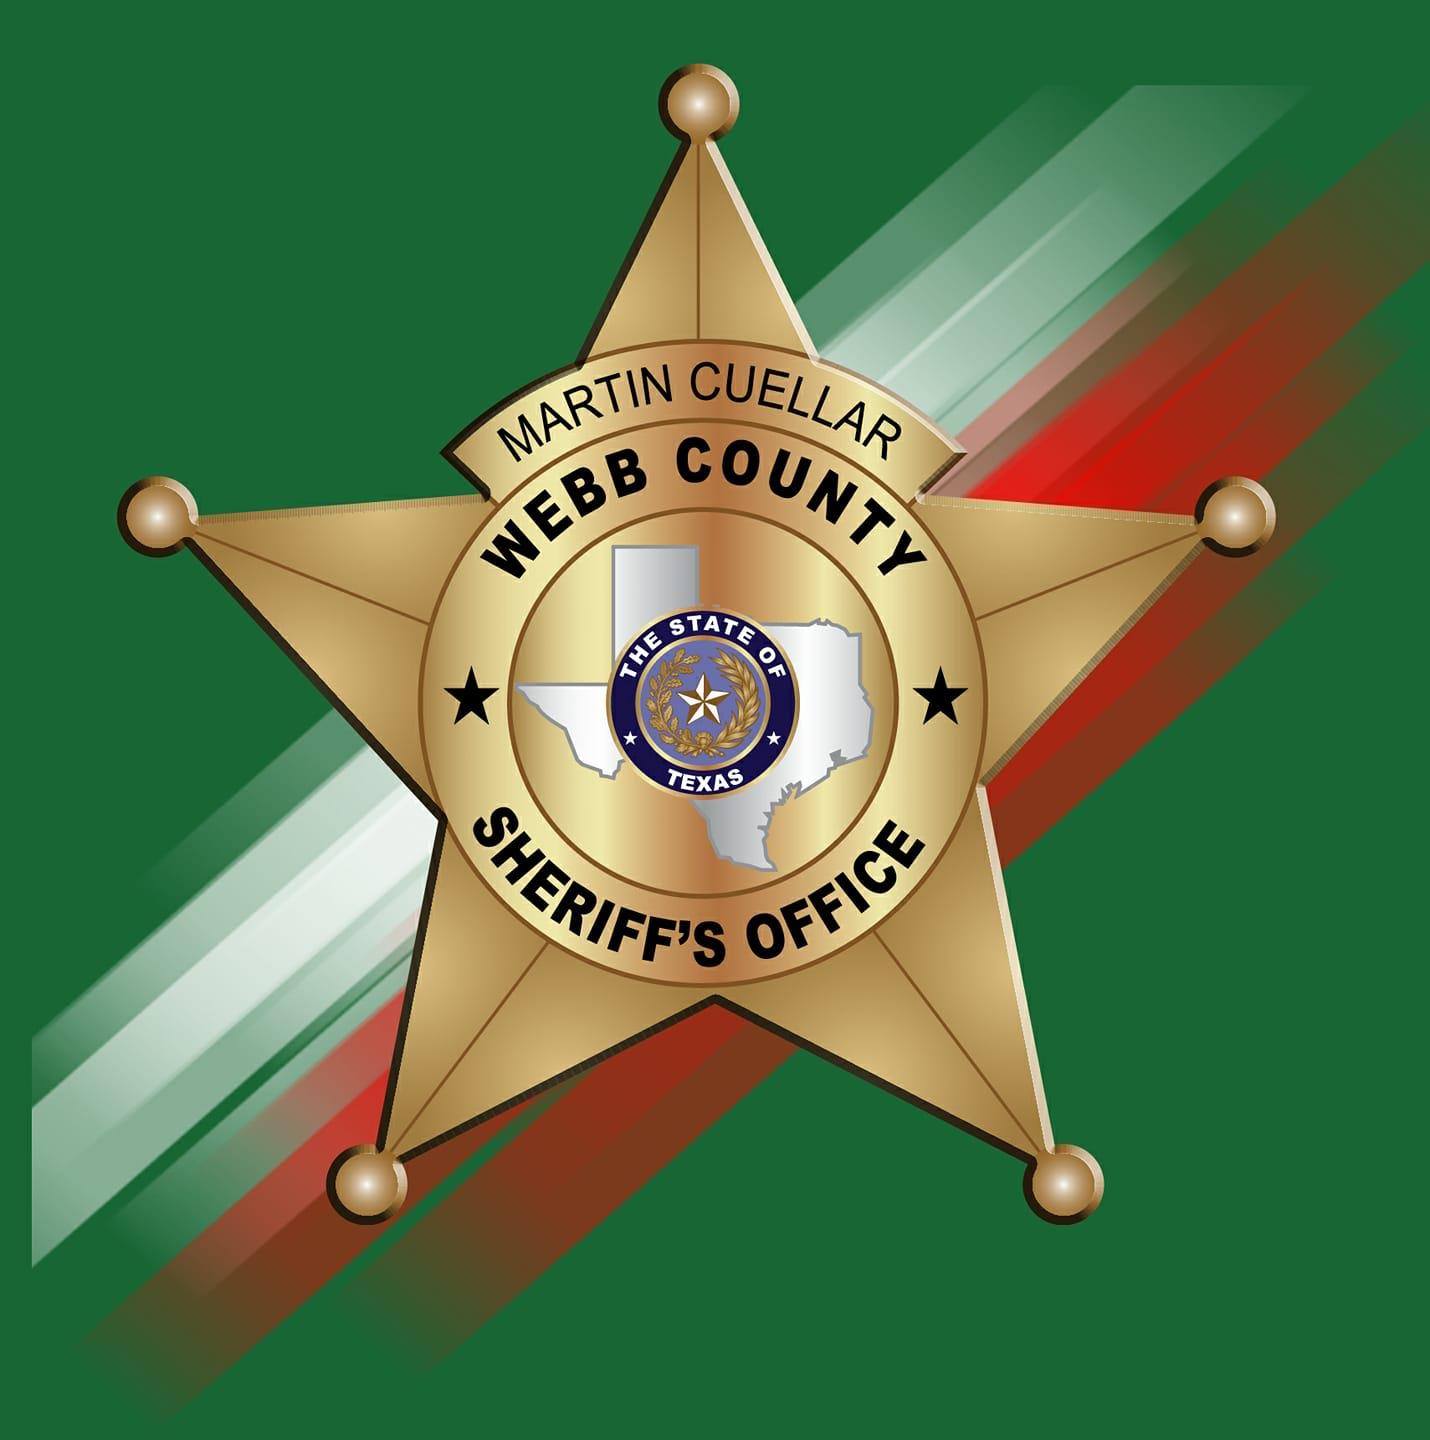  Webb County Sheriff's Office traffic stop yields $29K in drug proceeds 